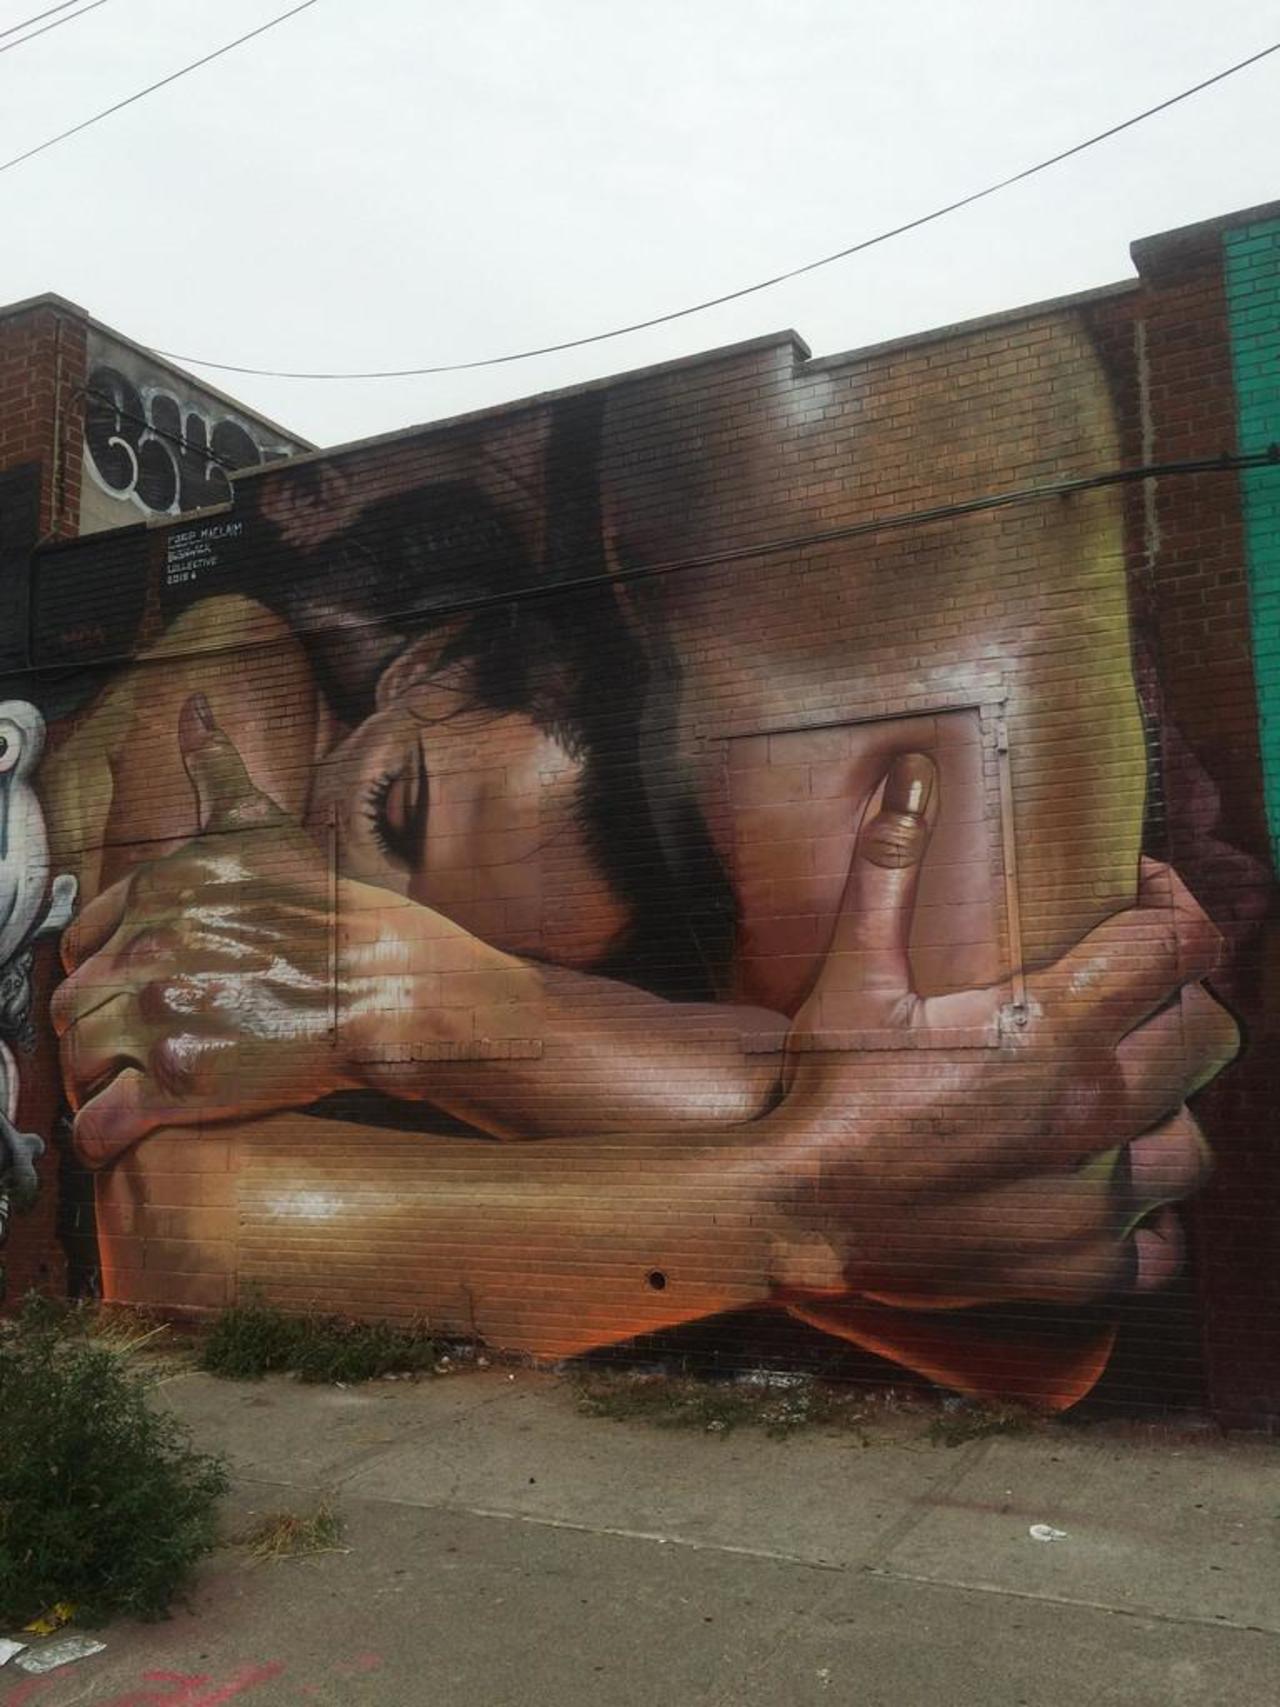 Case Maclaim's return to the Bushwick Collective in New York City. #StreetArt #Graffiti #Mural http://t.co/wwZ5OE9iZI